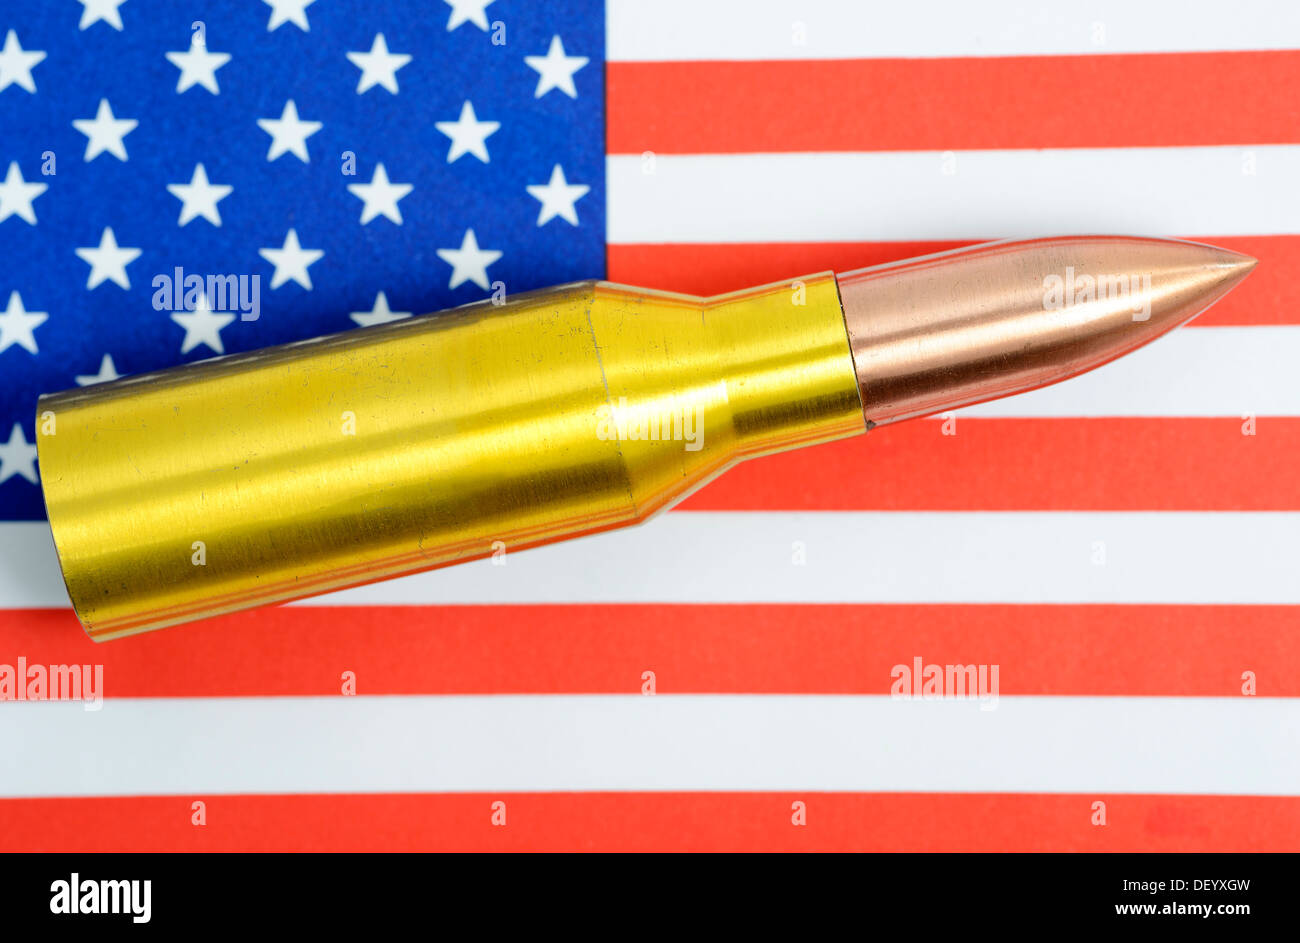 Cartridge on USA flag, terror warning, Patrone auf USA-Fahne, Terrorwarnung Stock Photo